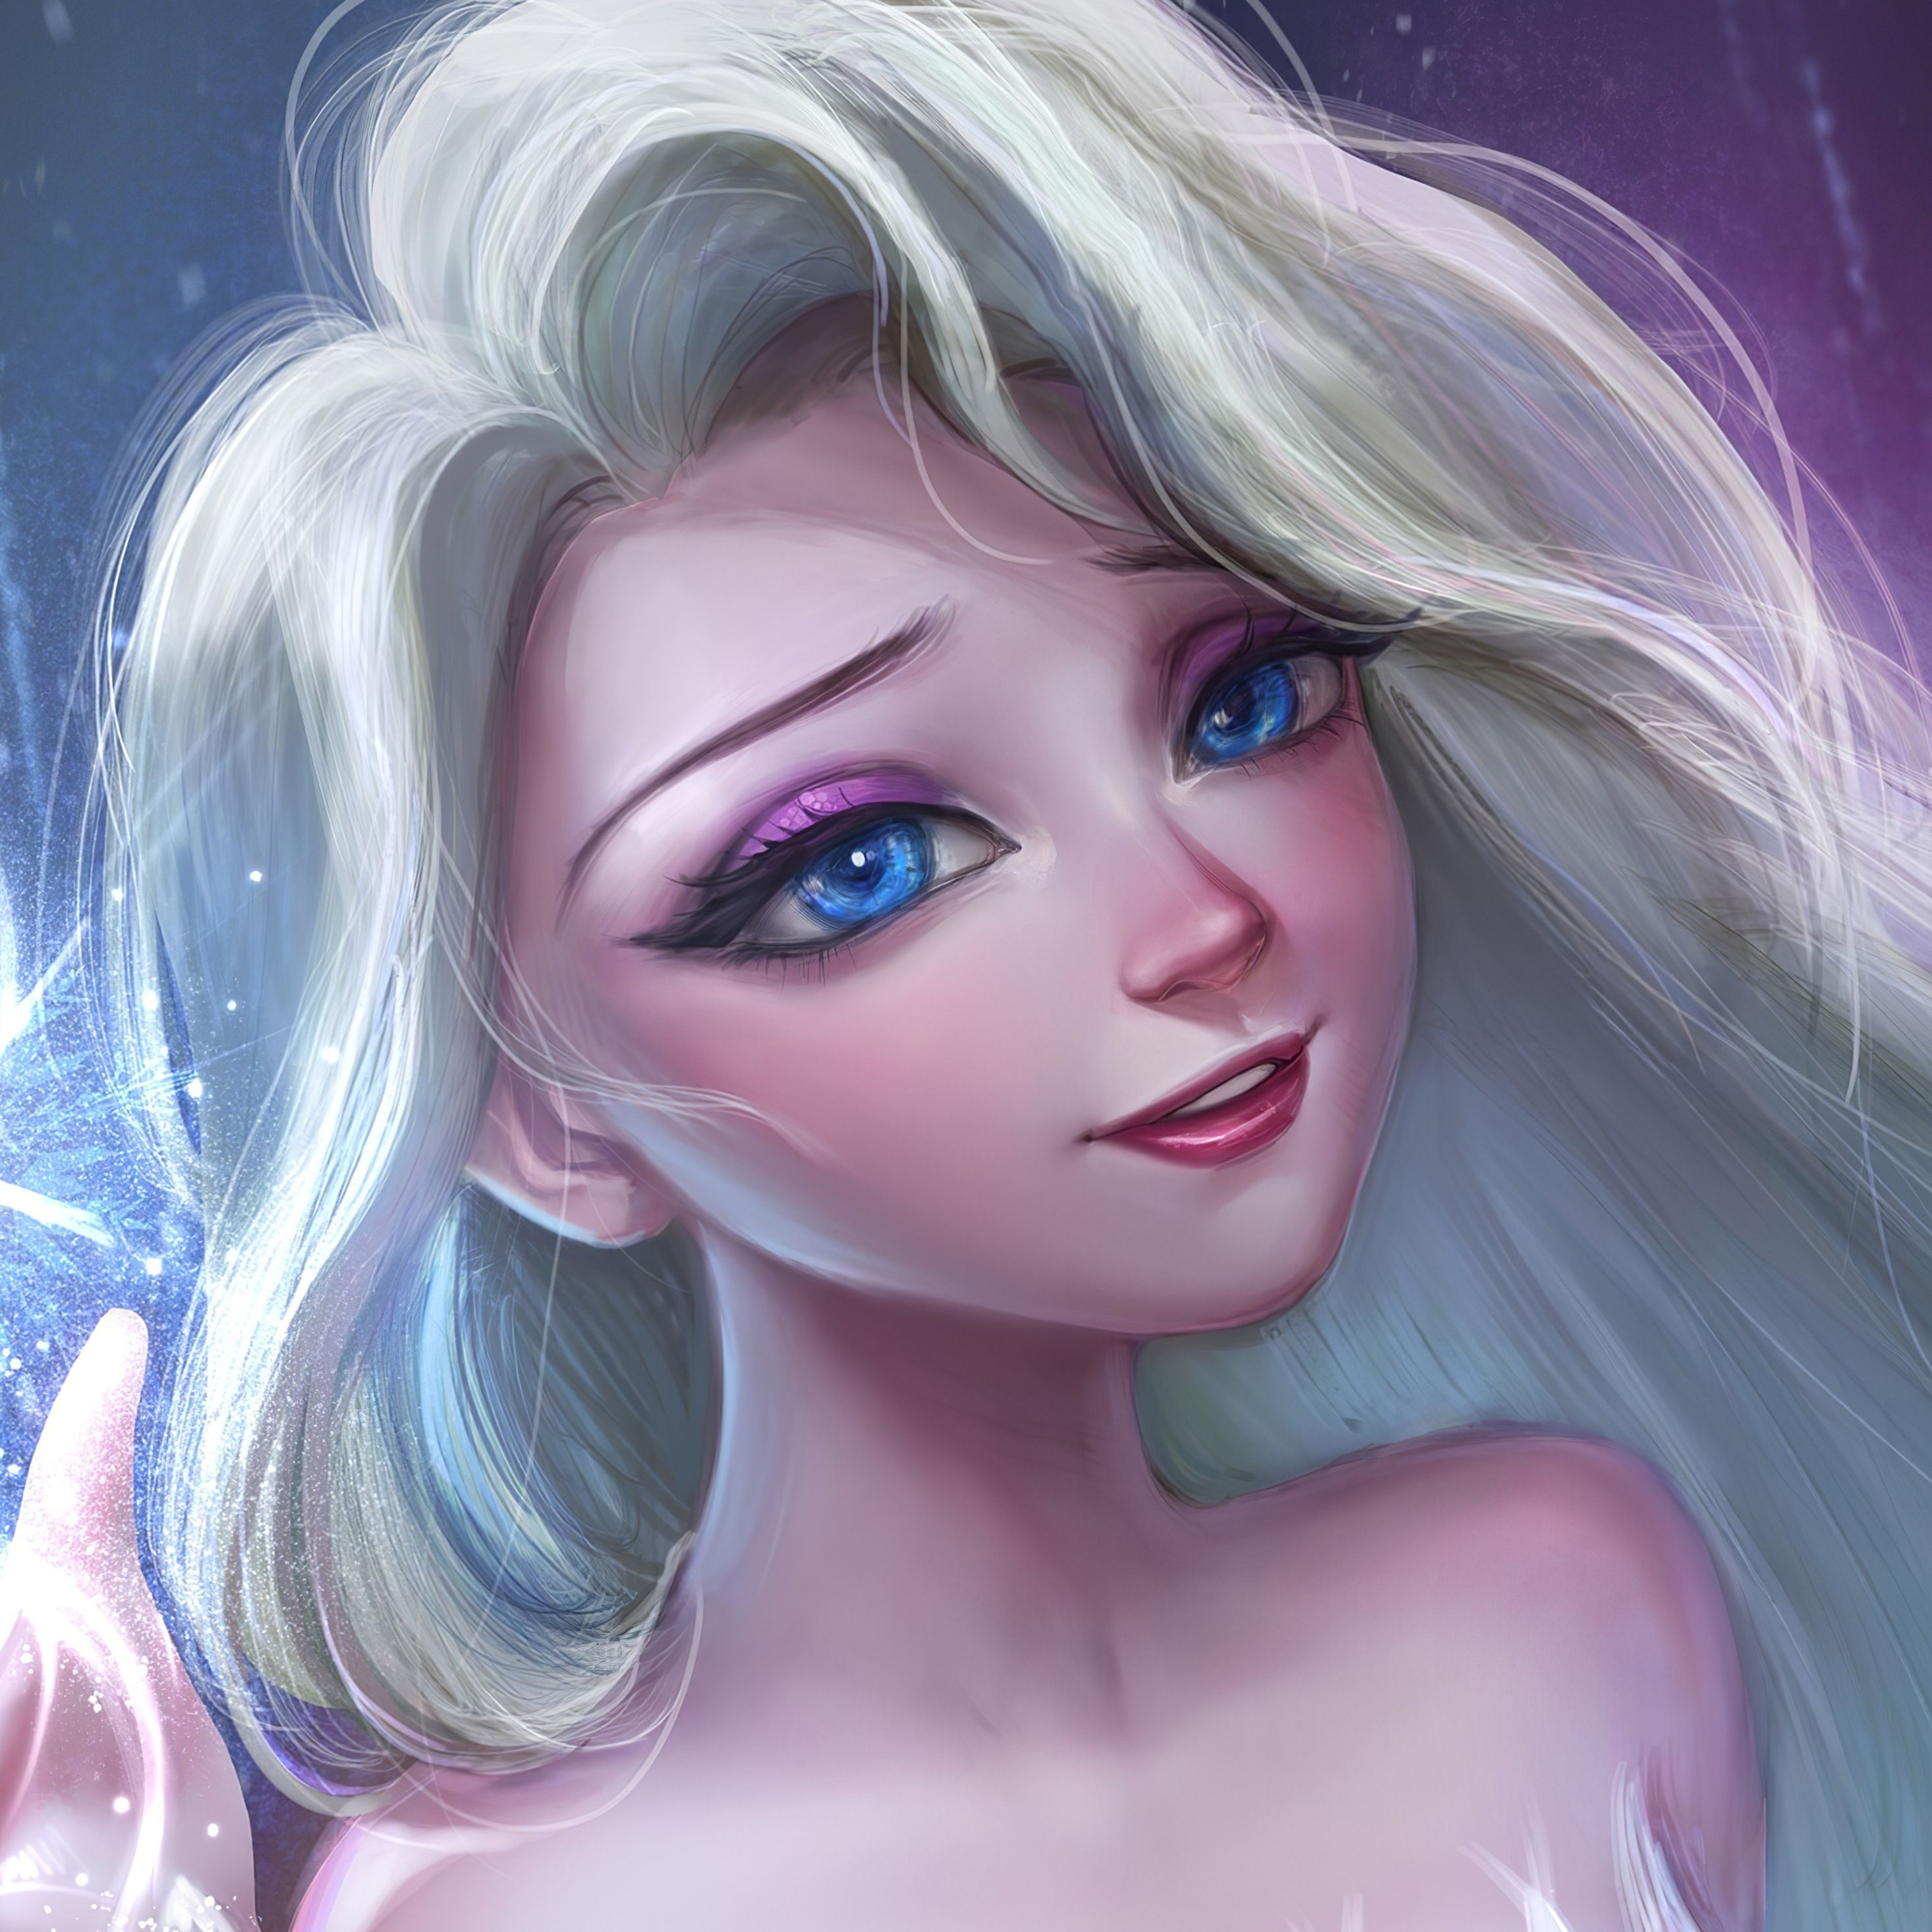 Elsa Frozen Blue Eyes 4k iPad Pro Retina Display HD 4k Wallpaper, Image, Background, Photo and Picture